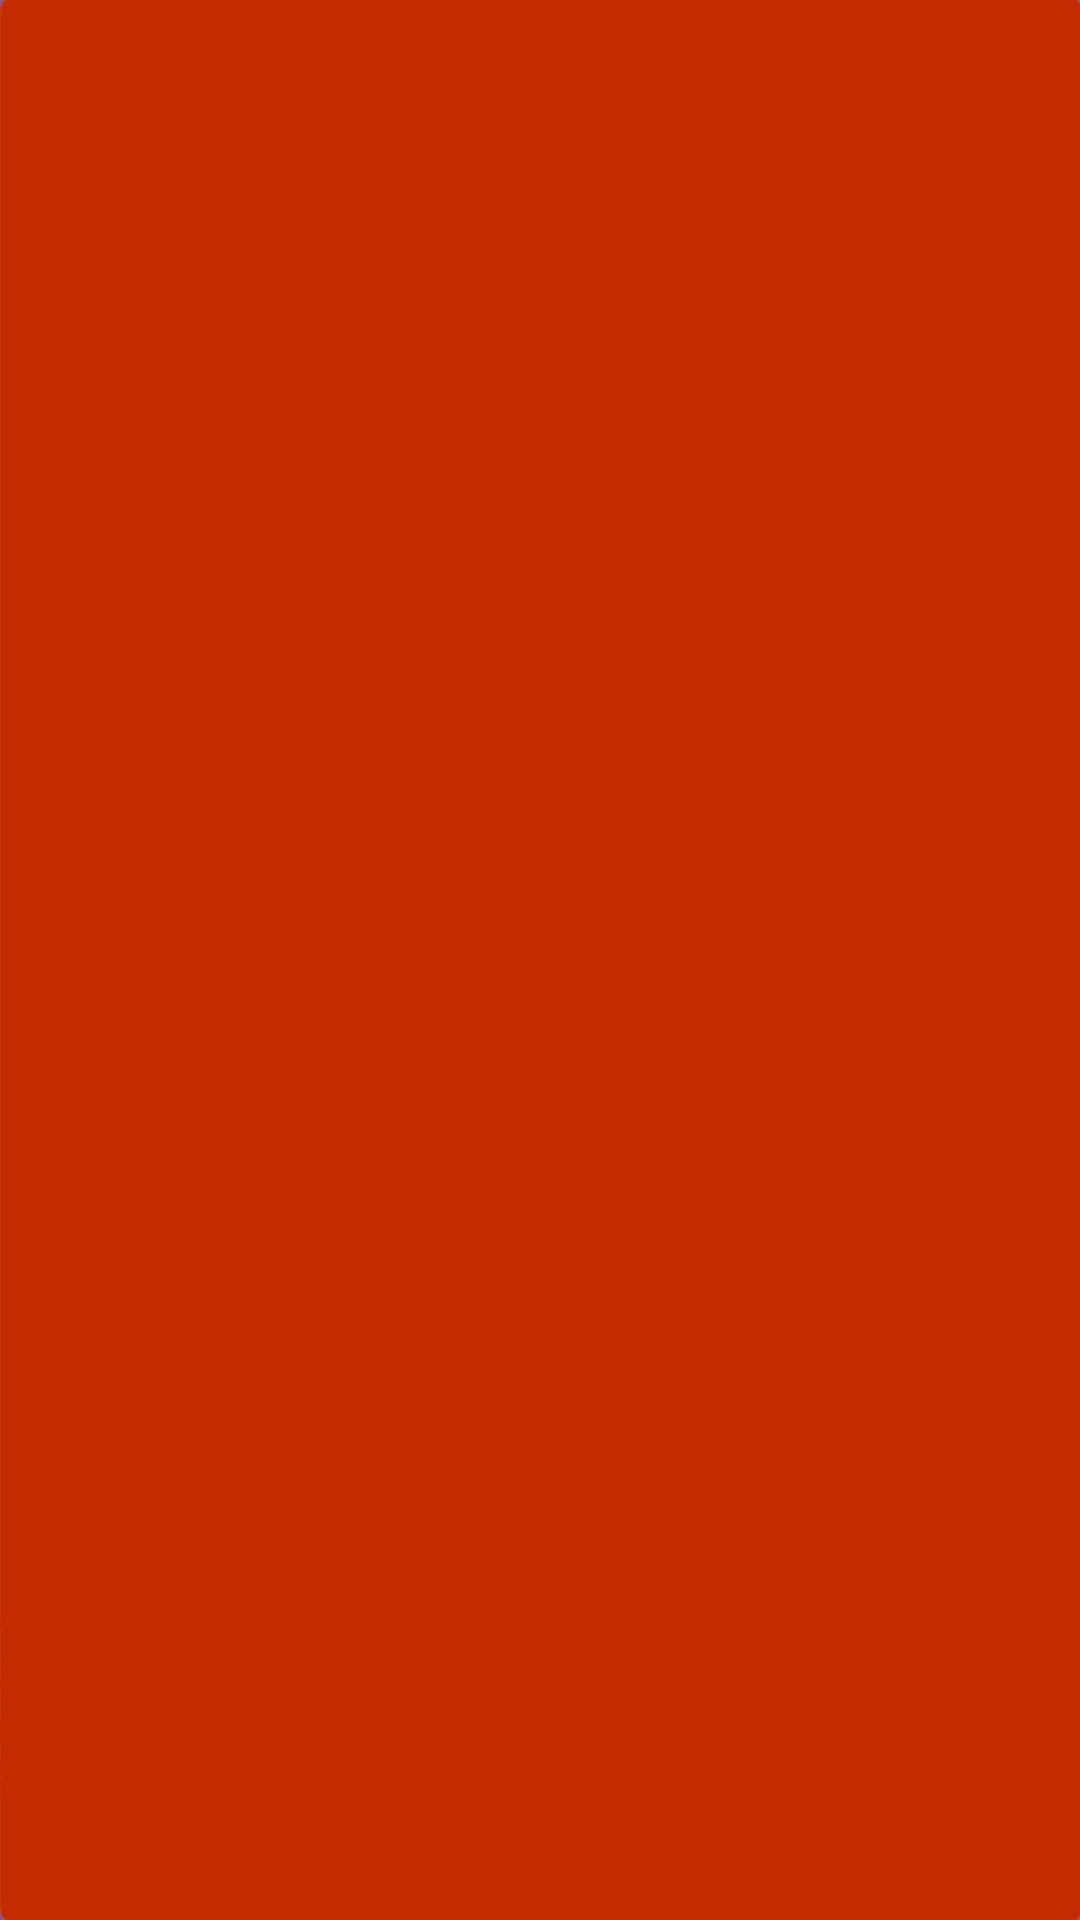 Almindelig Rød Iphone Wallpaper